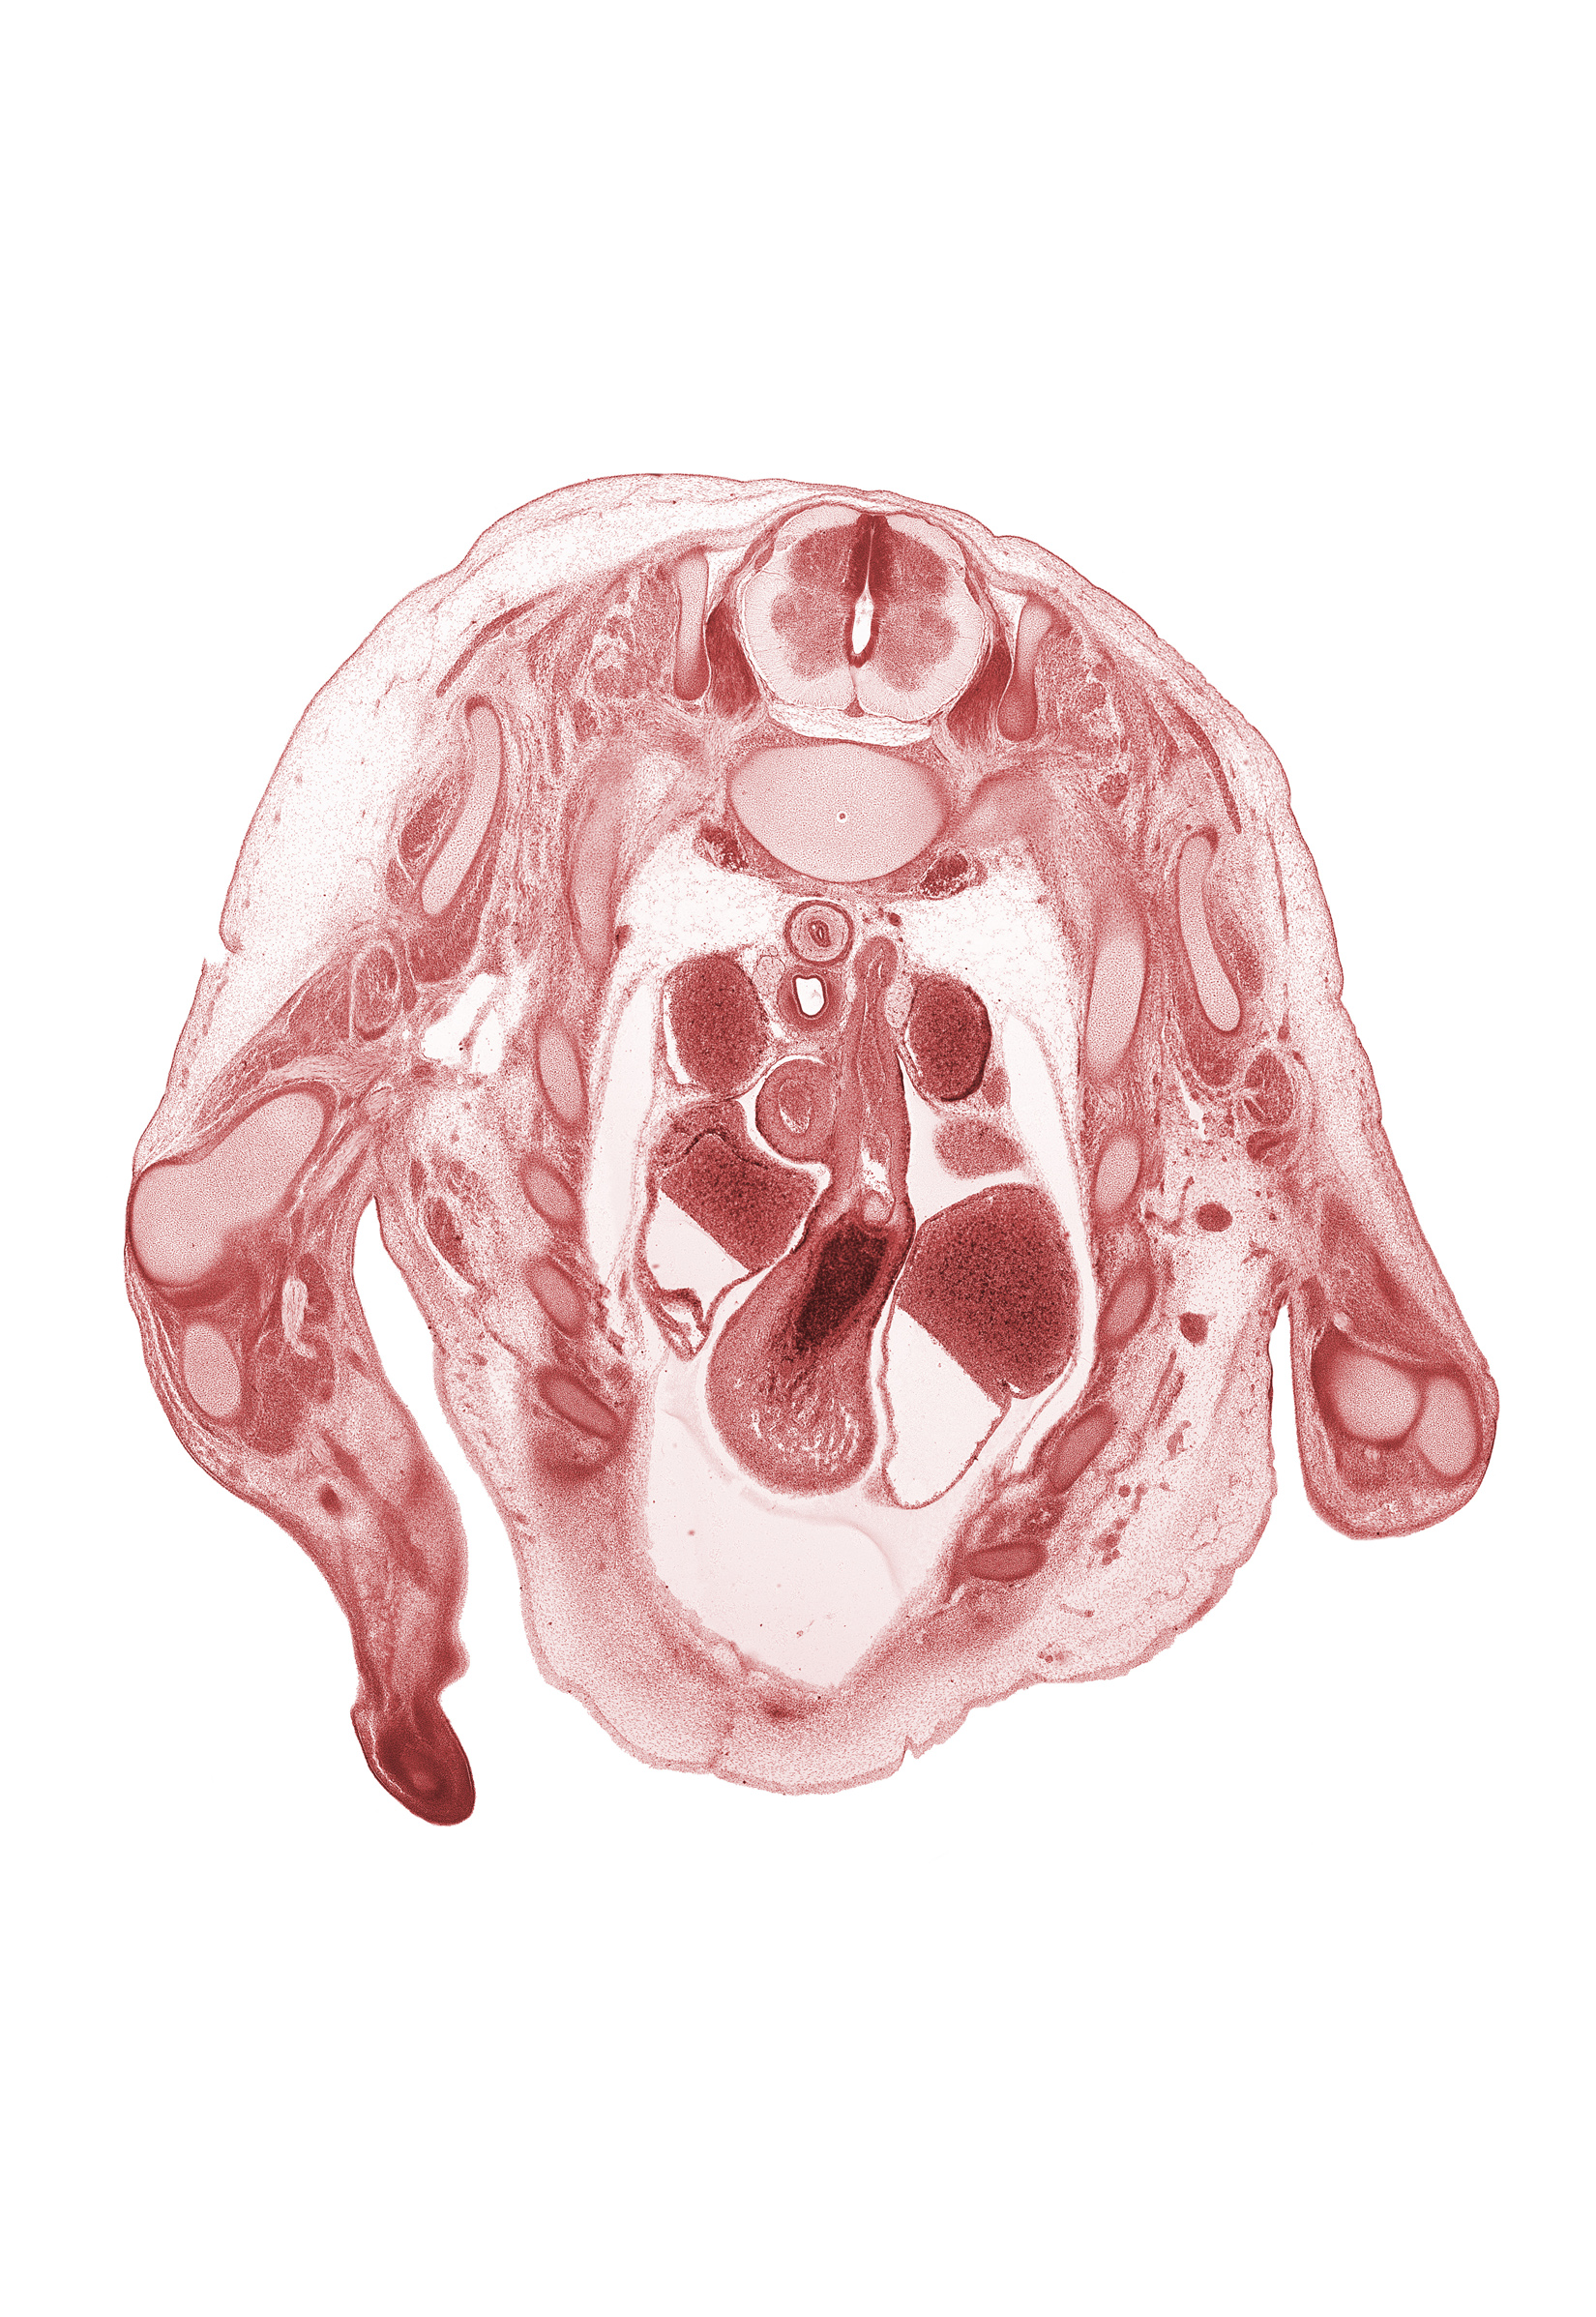 T-1 spinal ganglion, aorta, ascending aorta, caudal segment of left precardinal vein, dorsal horn of grey matter, ductus arteriosus, infundibulum of right ventricle, left atrium, left vagus nerve (CN X), pulmonary trunk, rib 10, rib 2, rib 8, right atrium, right vagus nerve (CN X), right ventricle, superior vena cava, ulna, ventral horn of grey matter